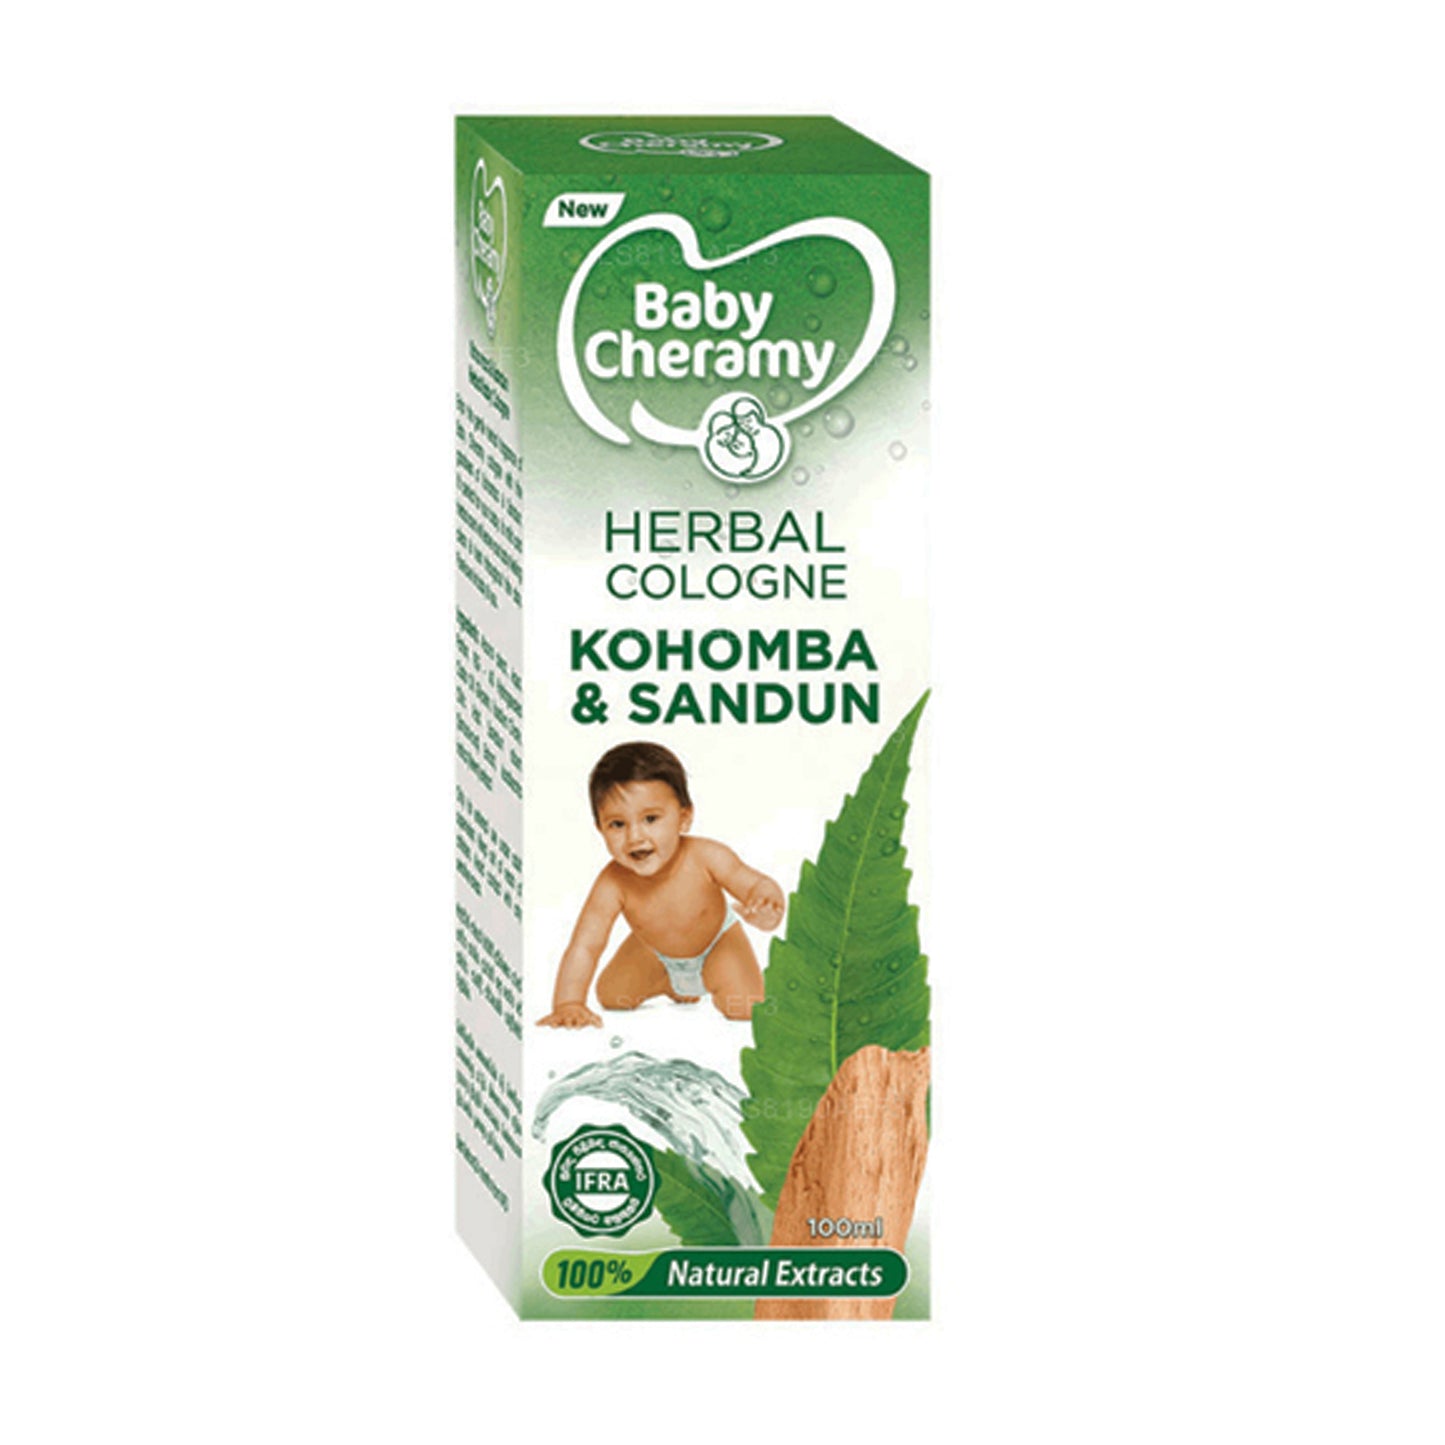 Baby Cheramy Urte Kohomba og Sandun Cologne (100 ml)